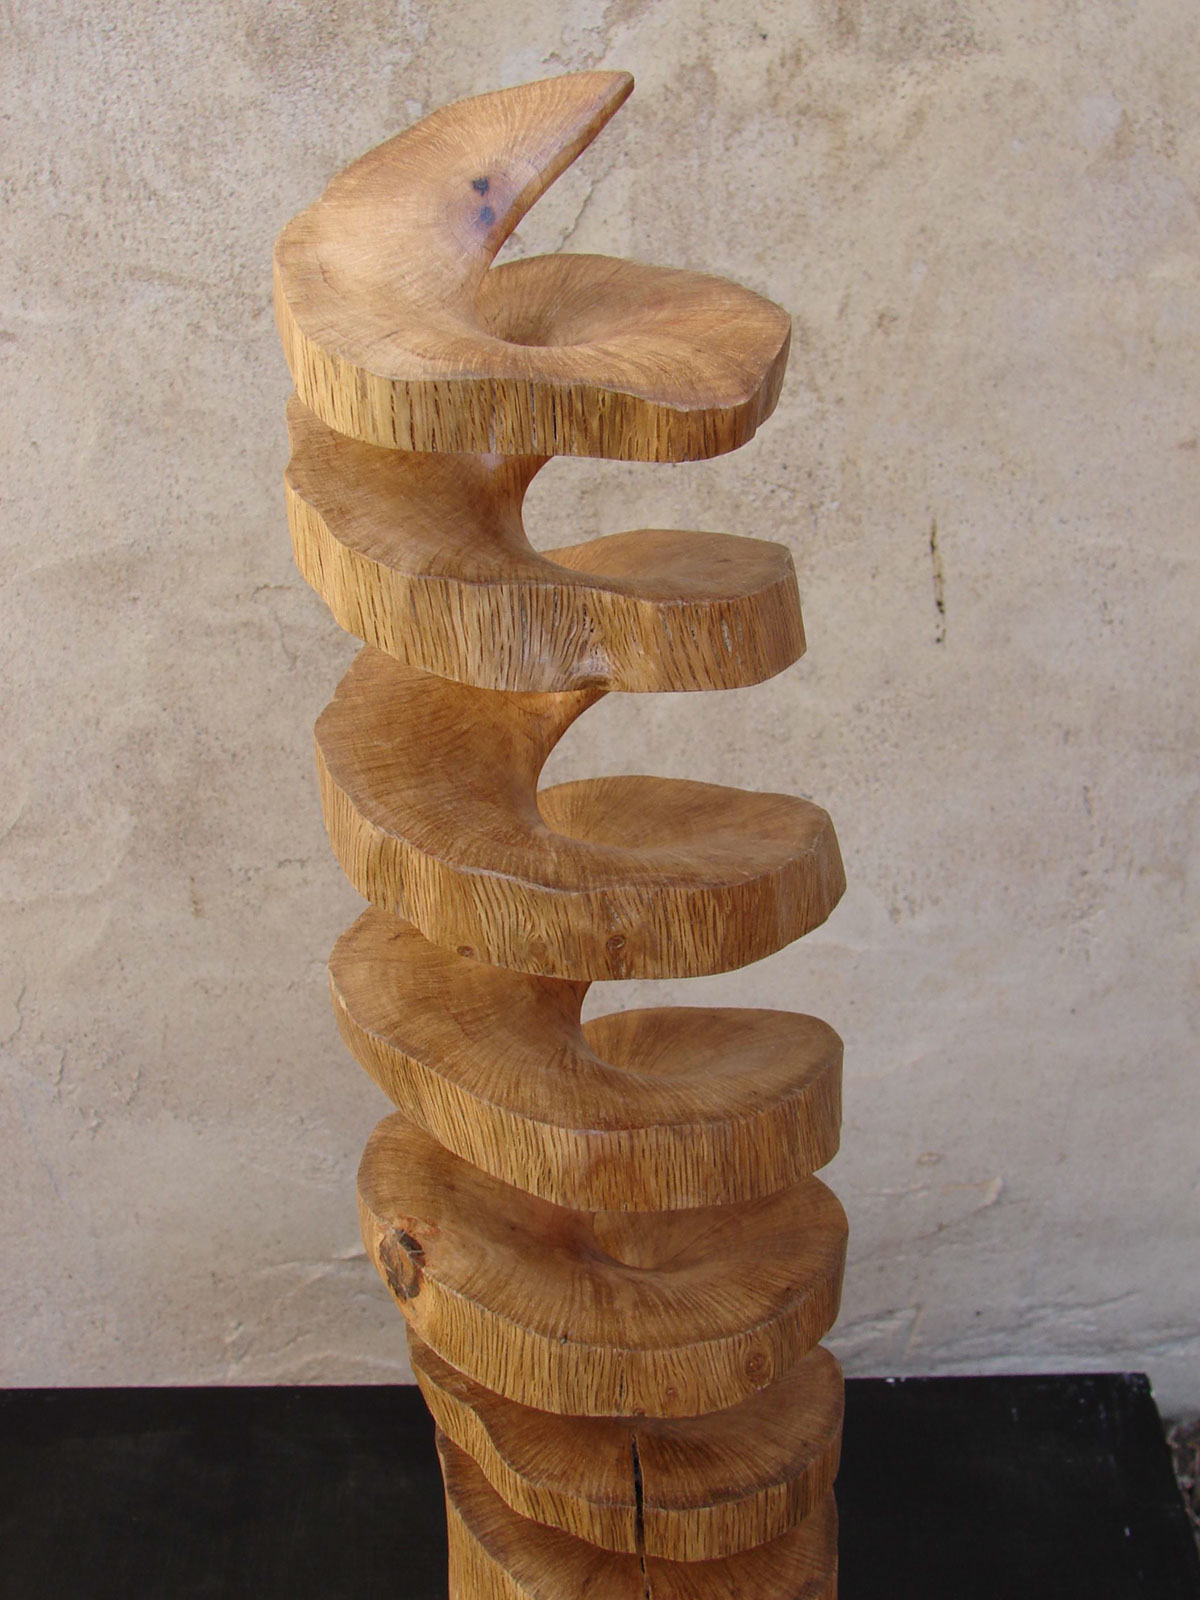 wood carving wood sculpture